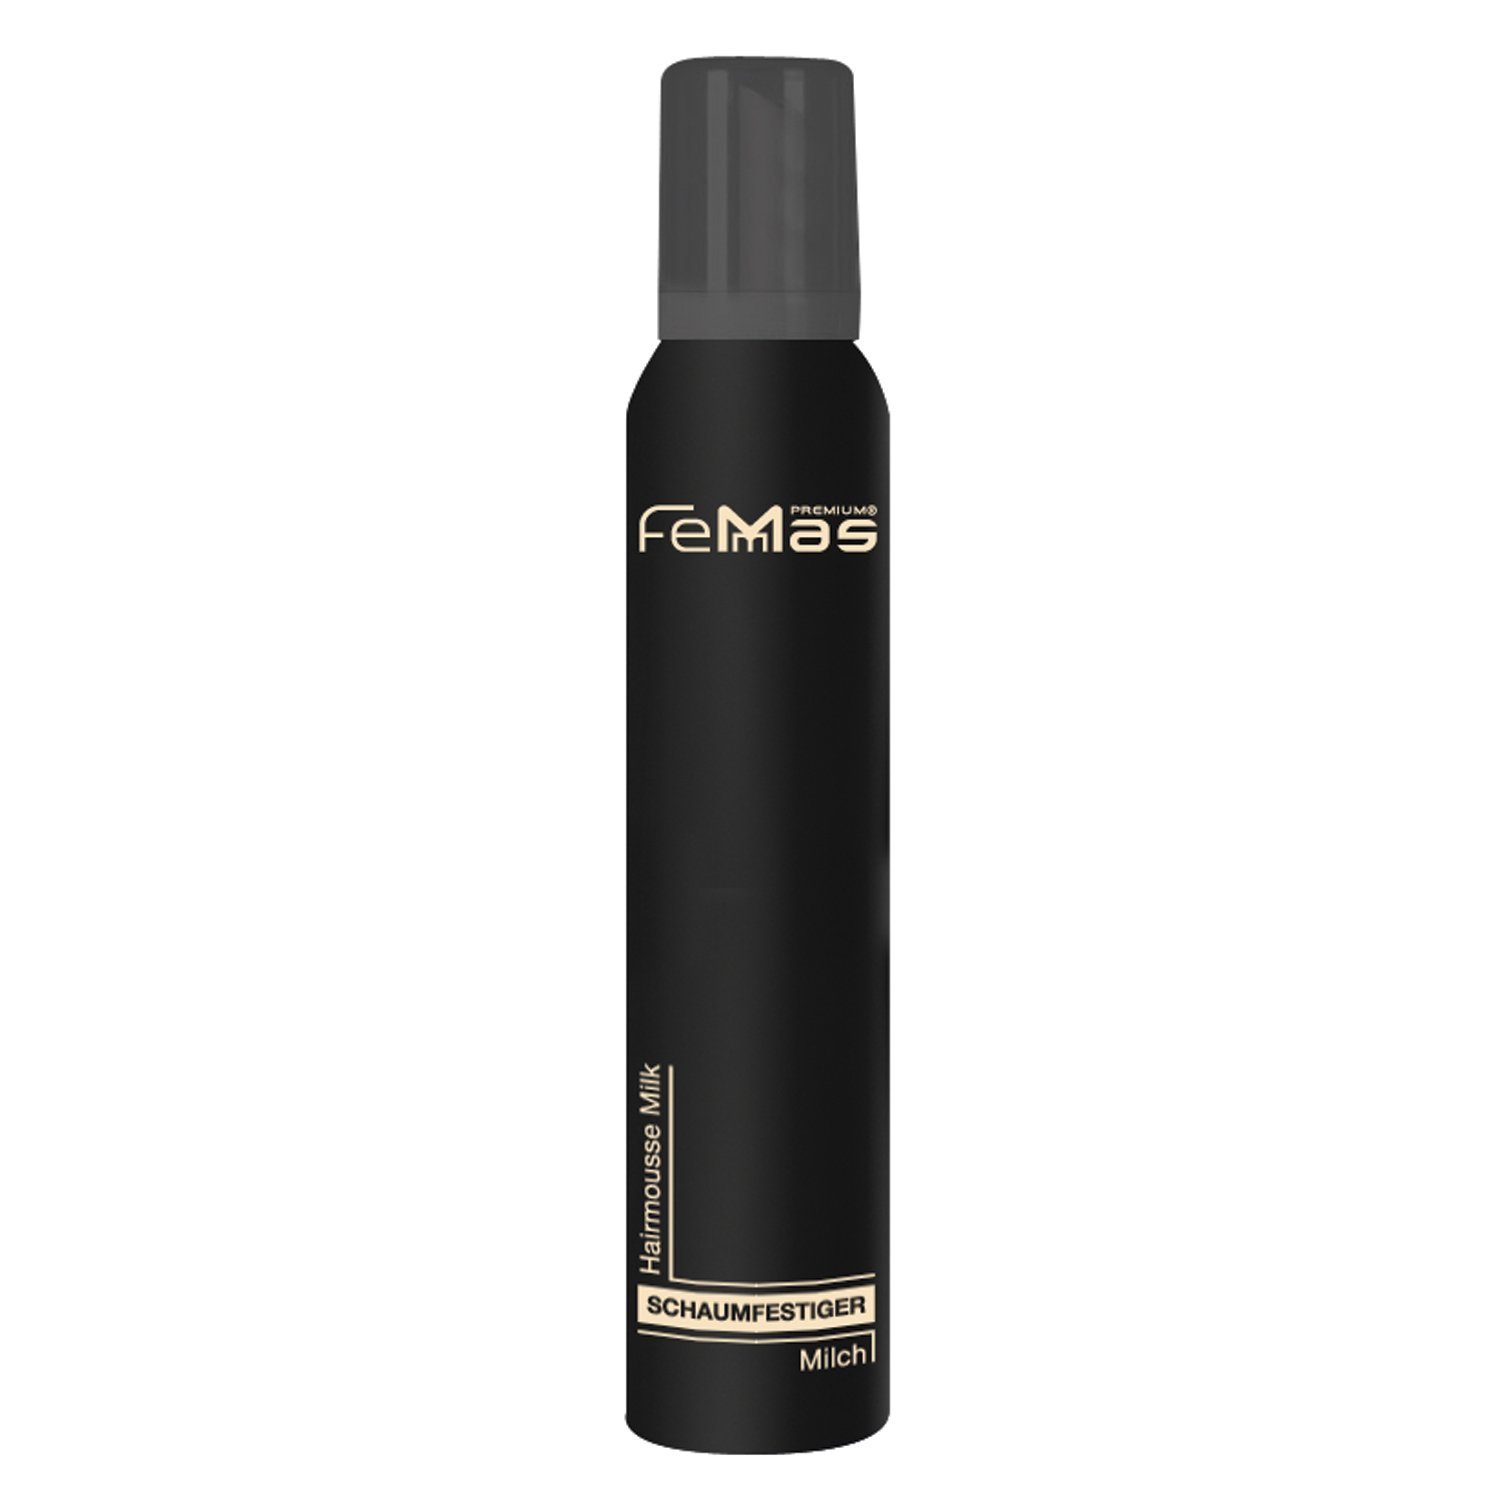 Femmas Premium Haarschaum FemMas Milchschaumfestiger 350ml